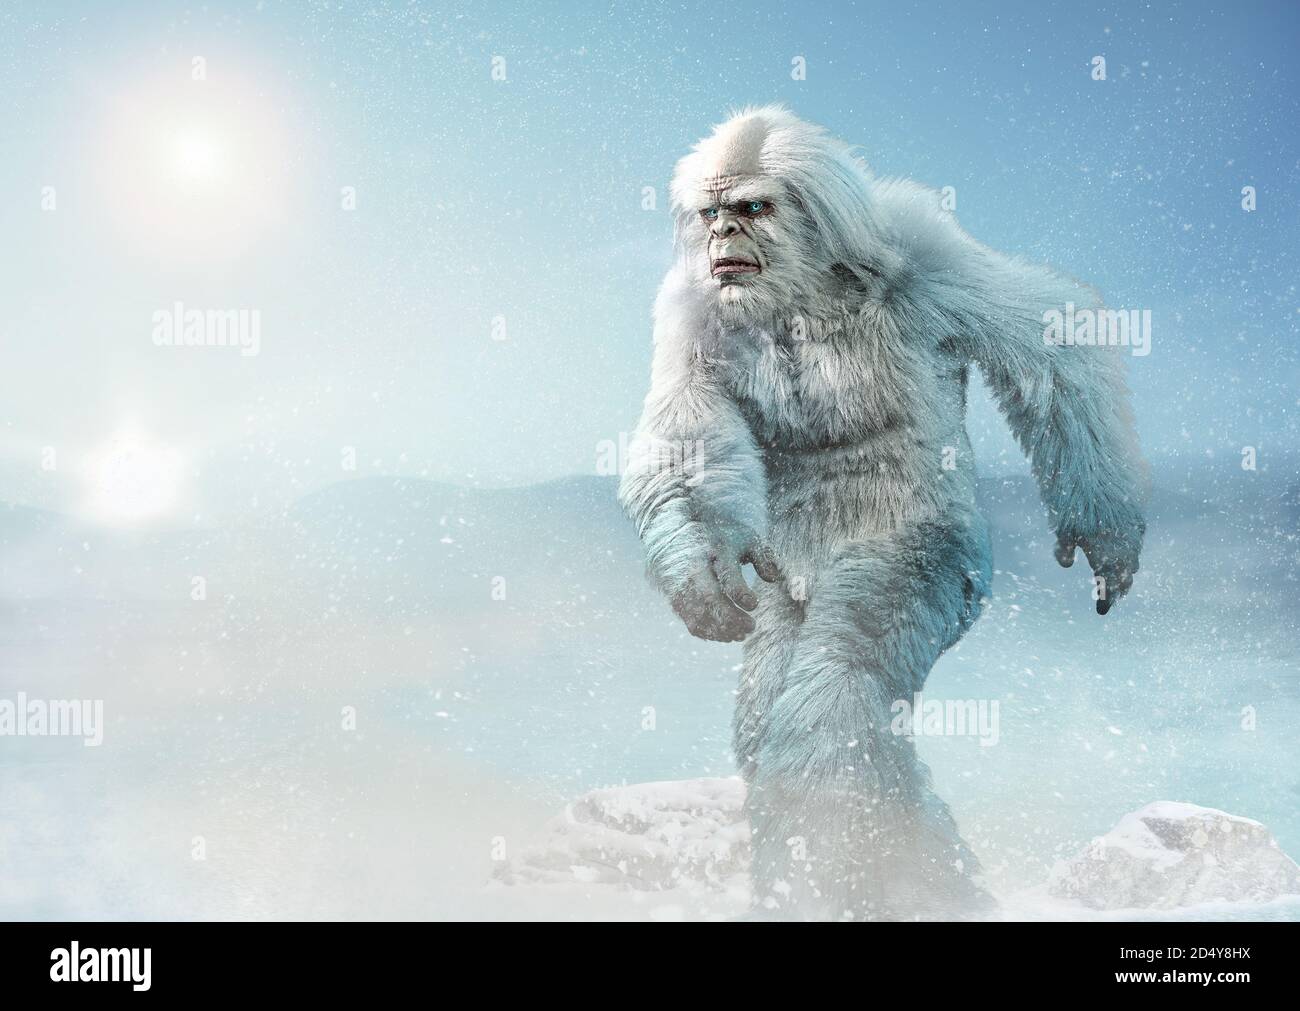 Yeti or abominable snowman 3D illustration Stock Photo